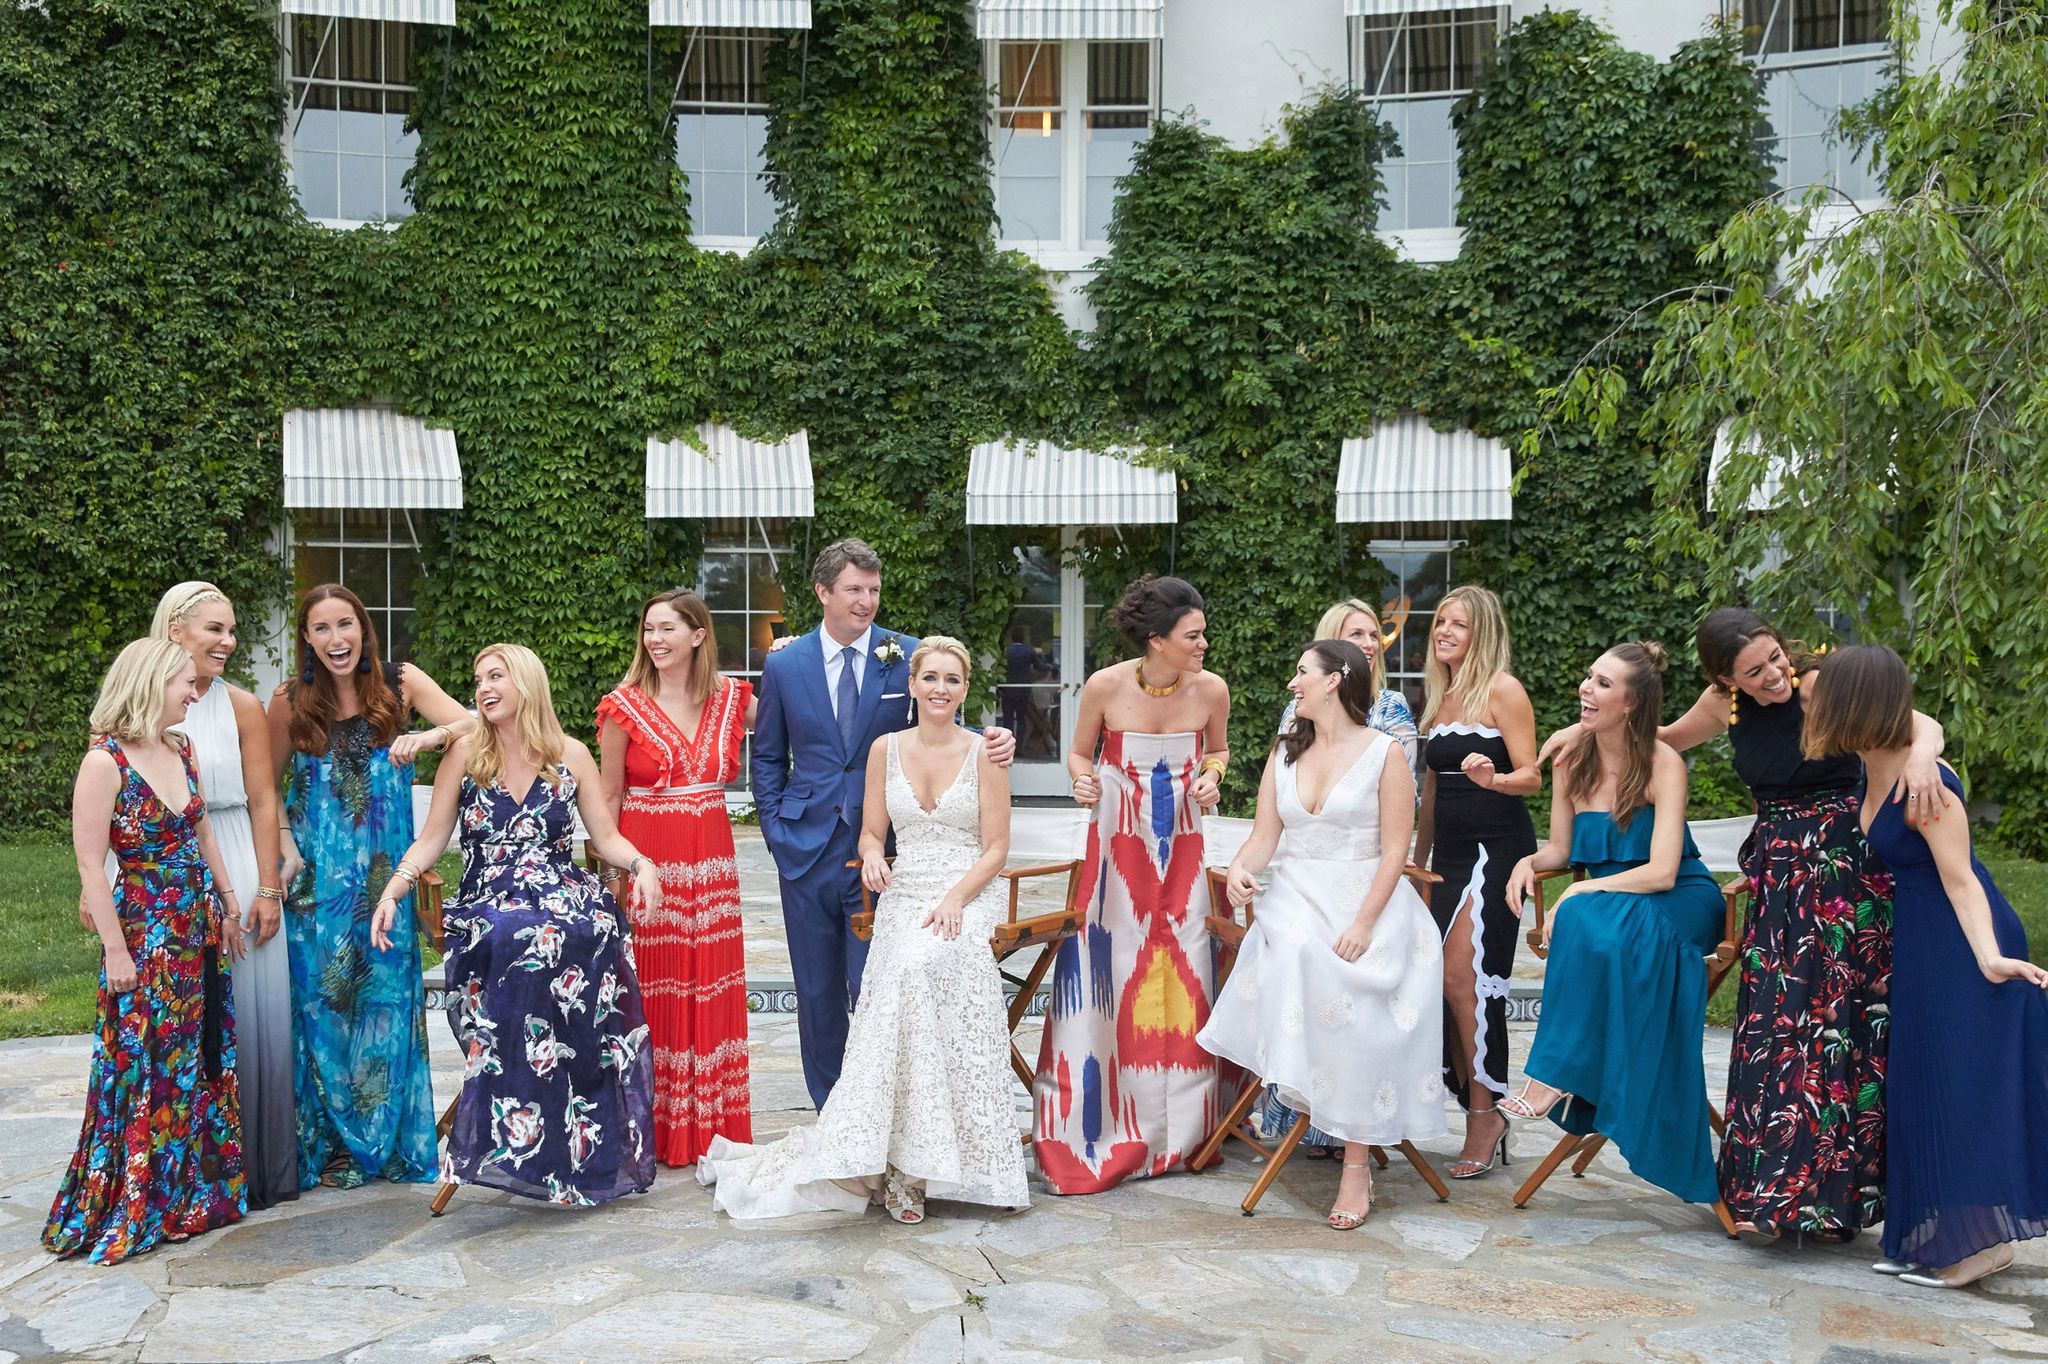 bridesmaid dress styles 2018